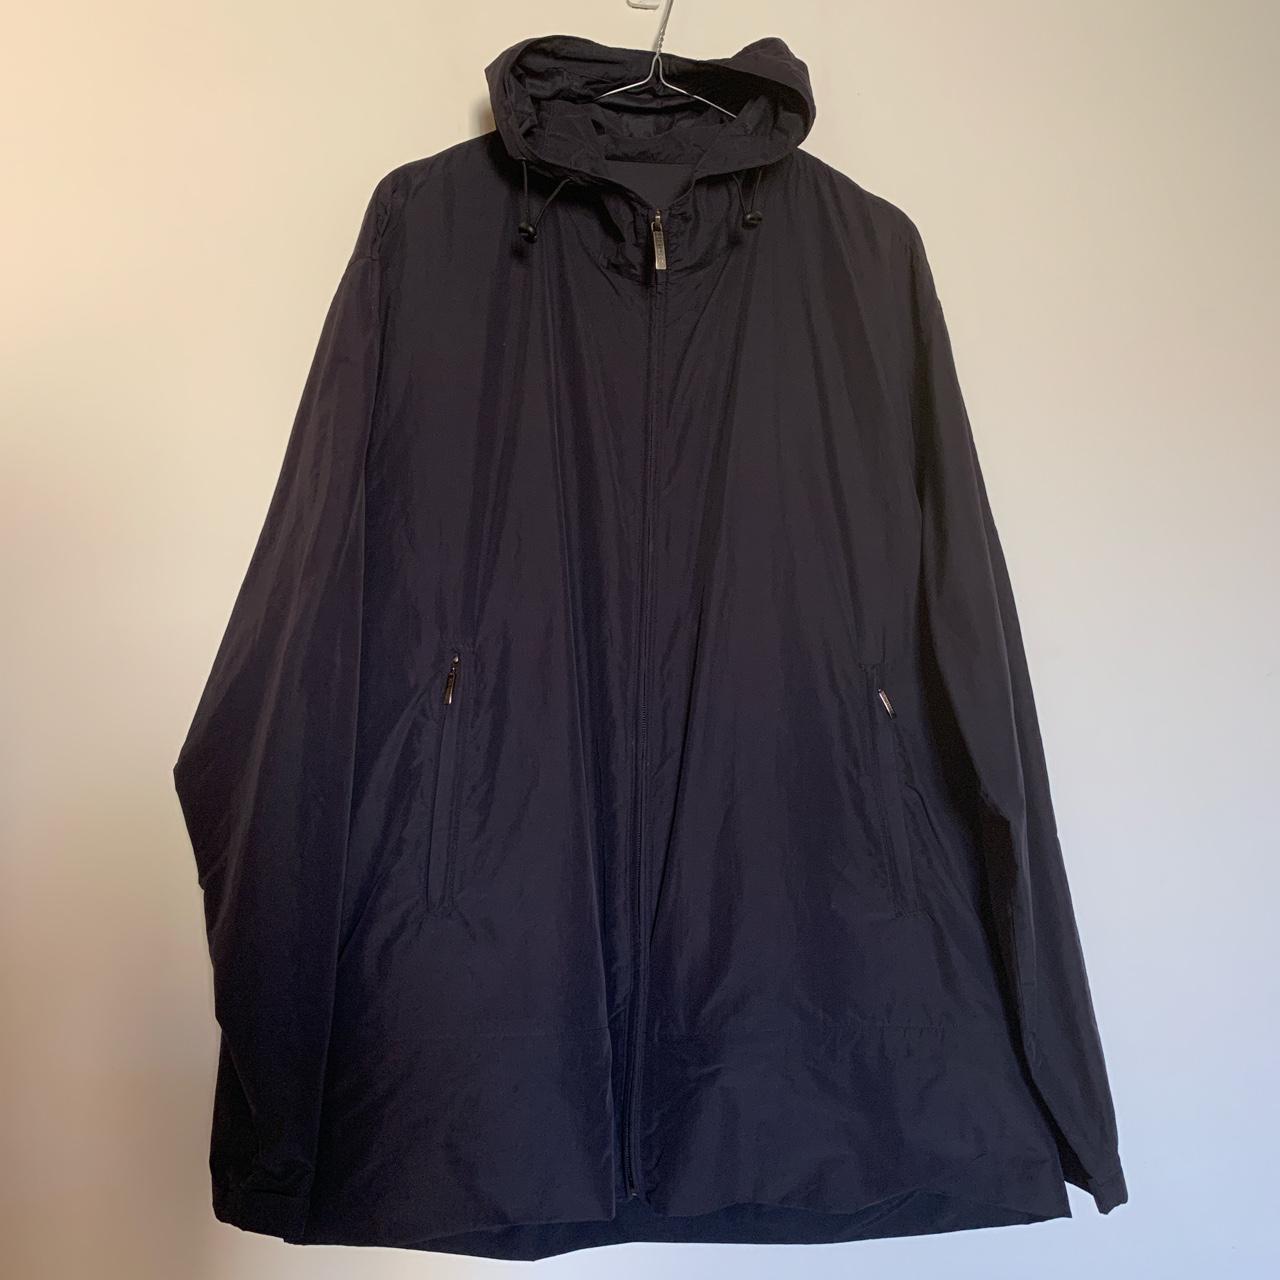 Vintage Burberry raincoat jacket with multiple... - Depop